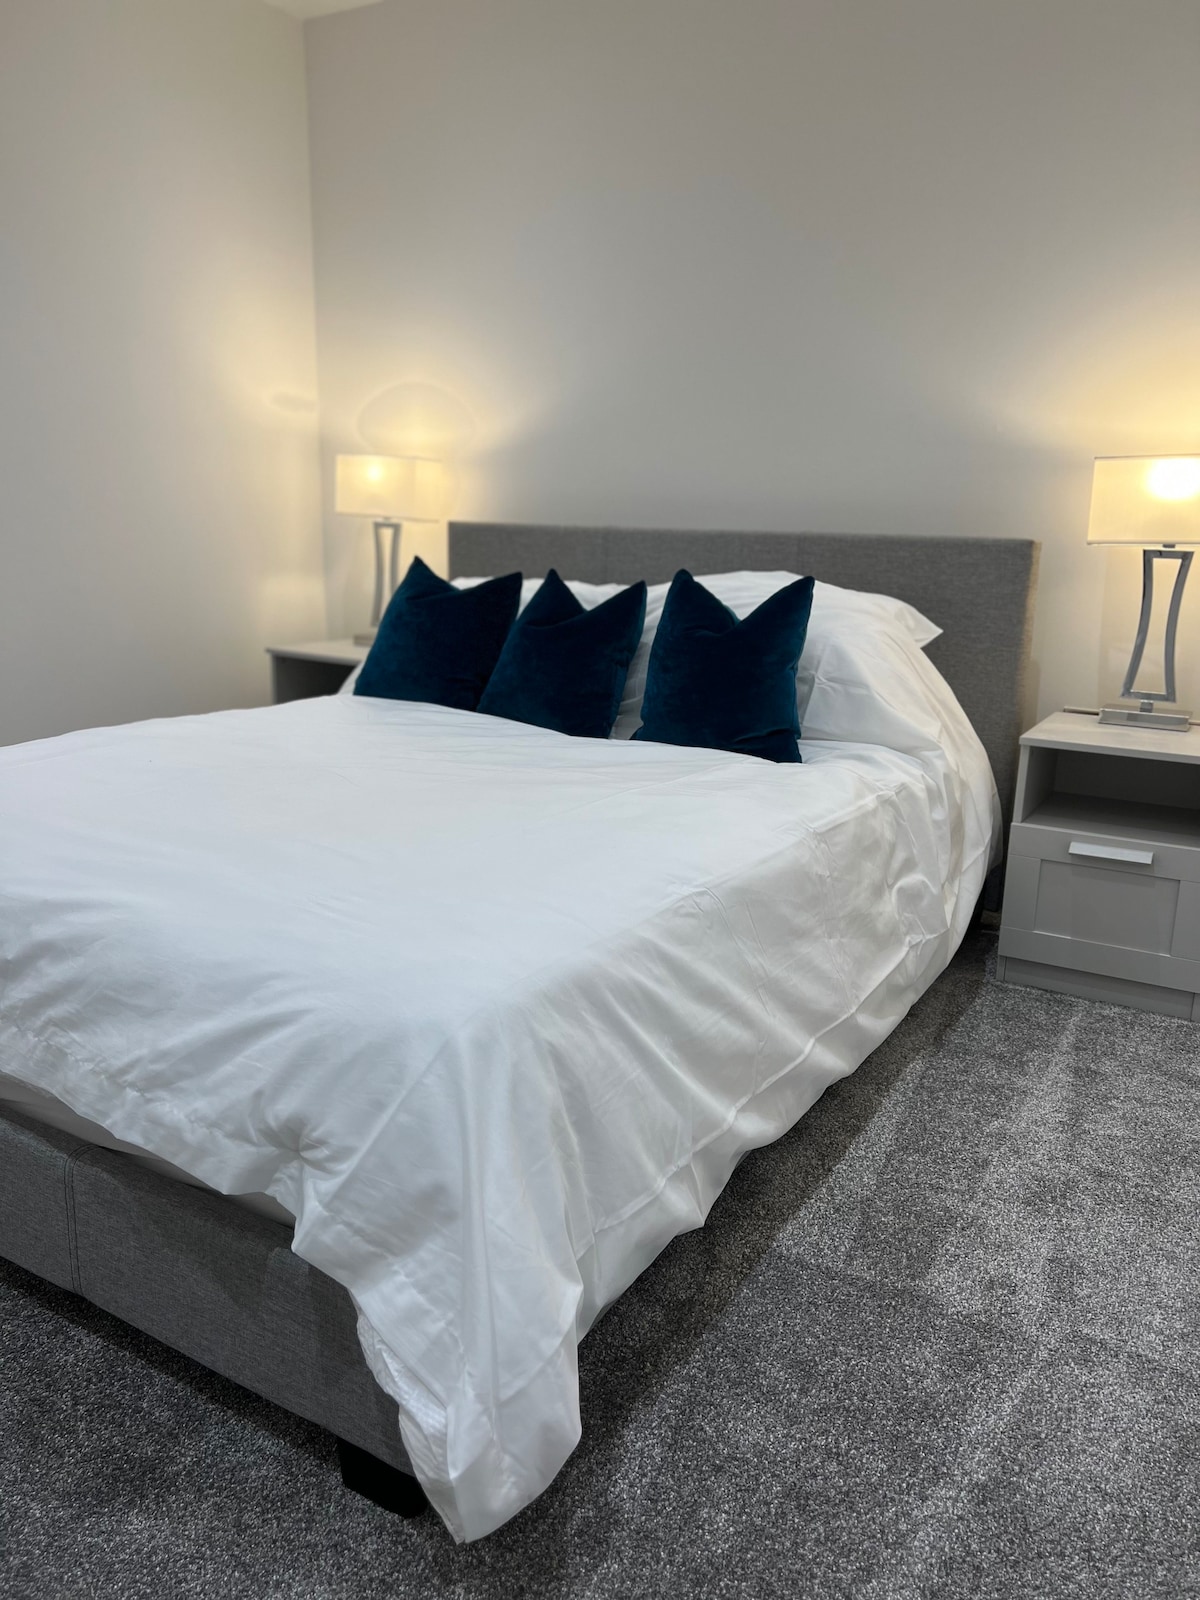 New 2 Bedroom Flat London